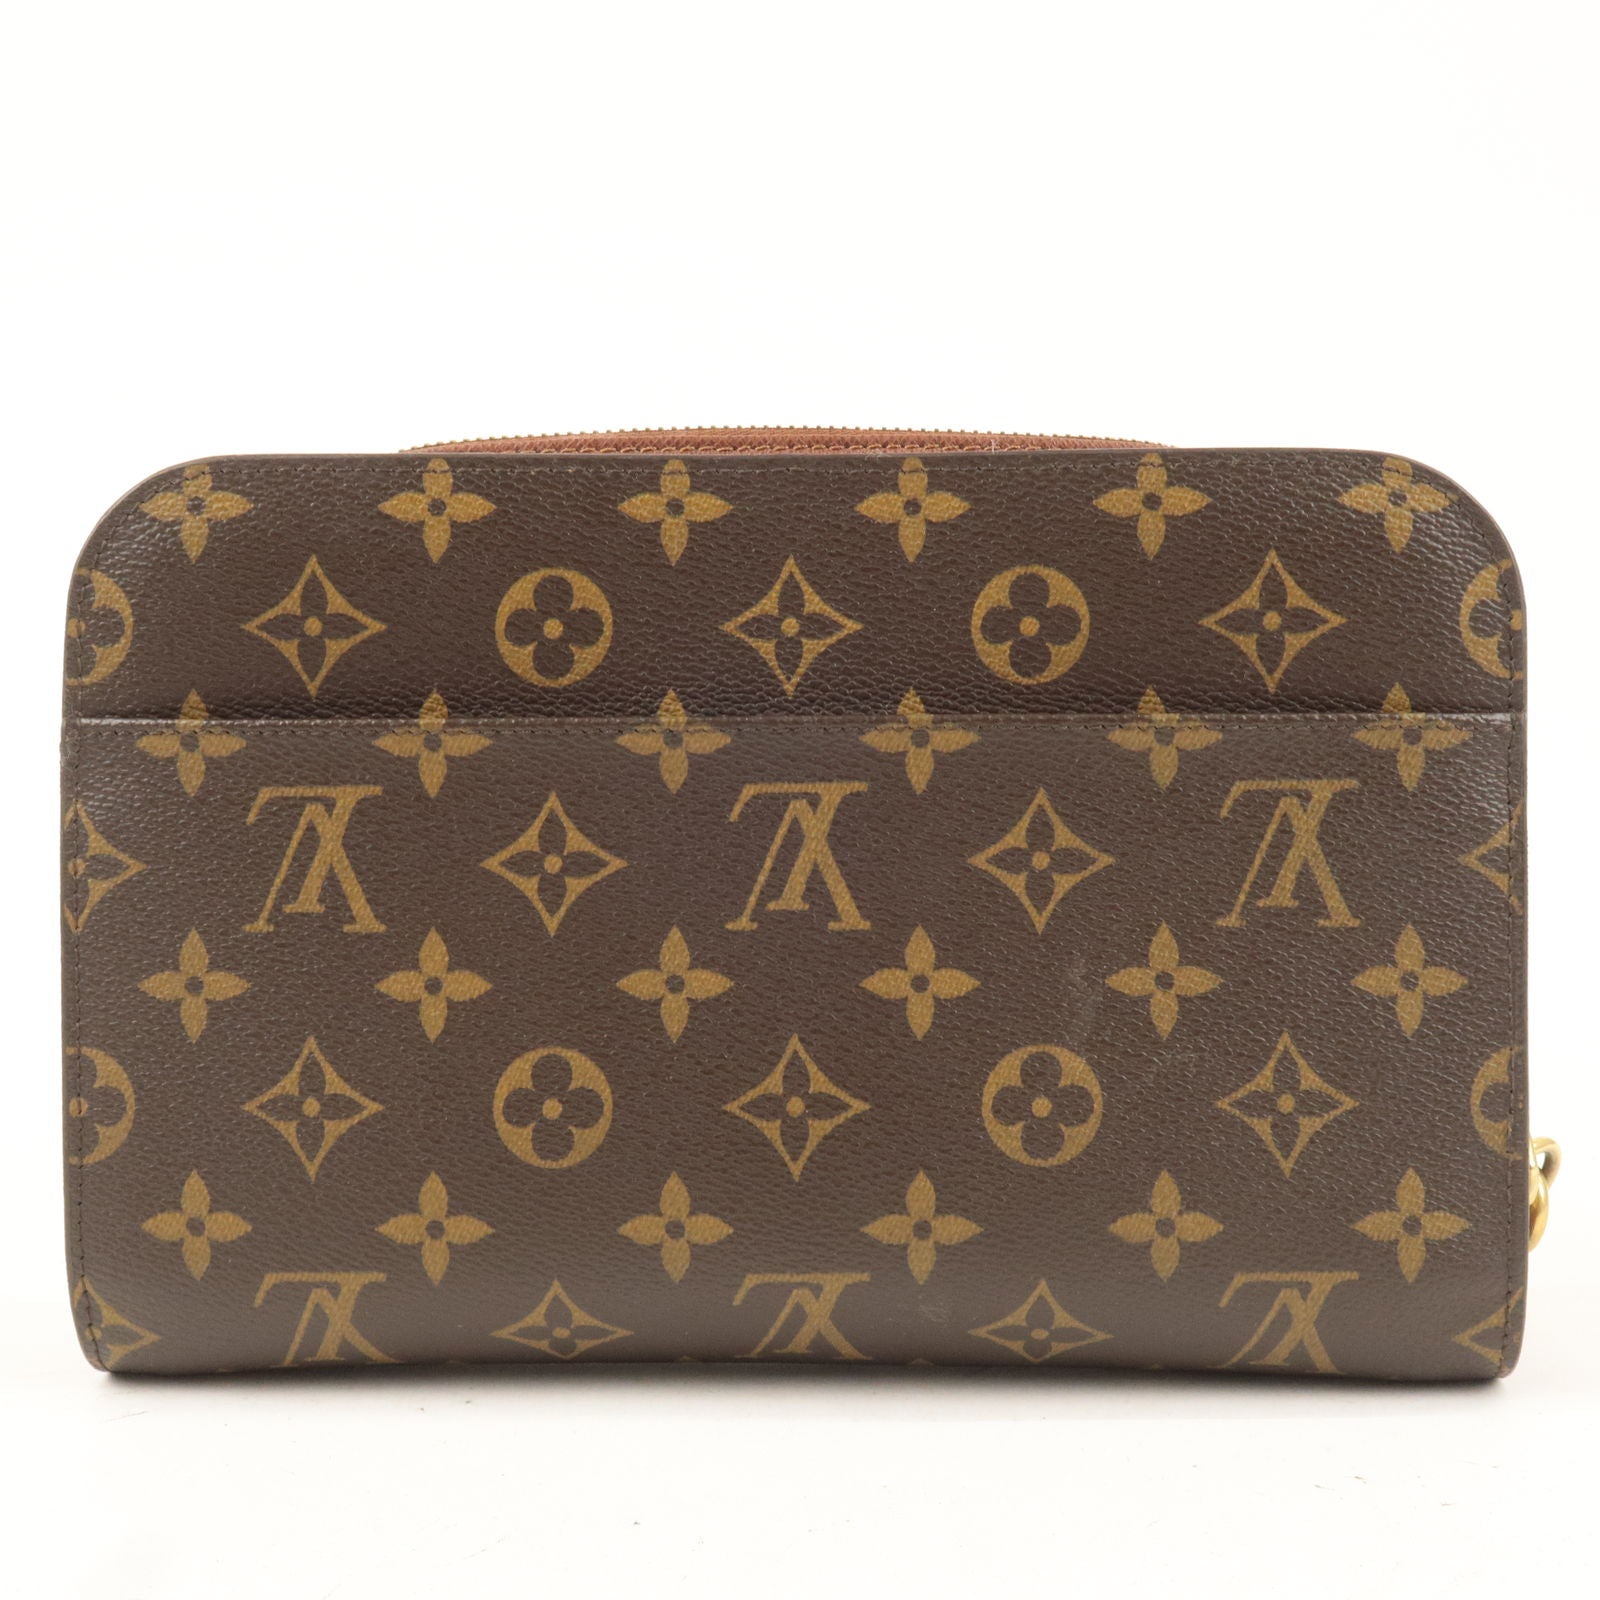 Louis Vuitton Men's Clutch Bags - Bags